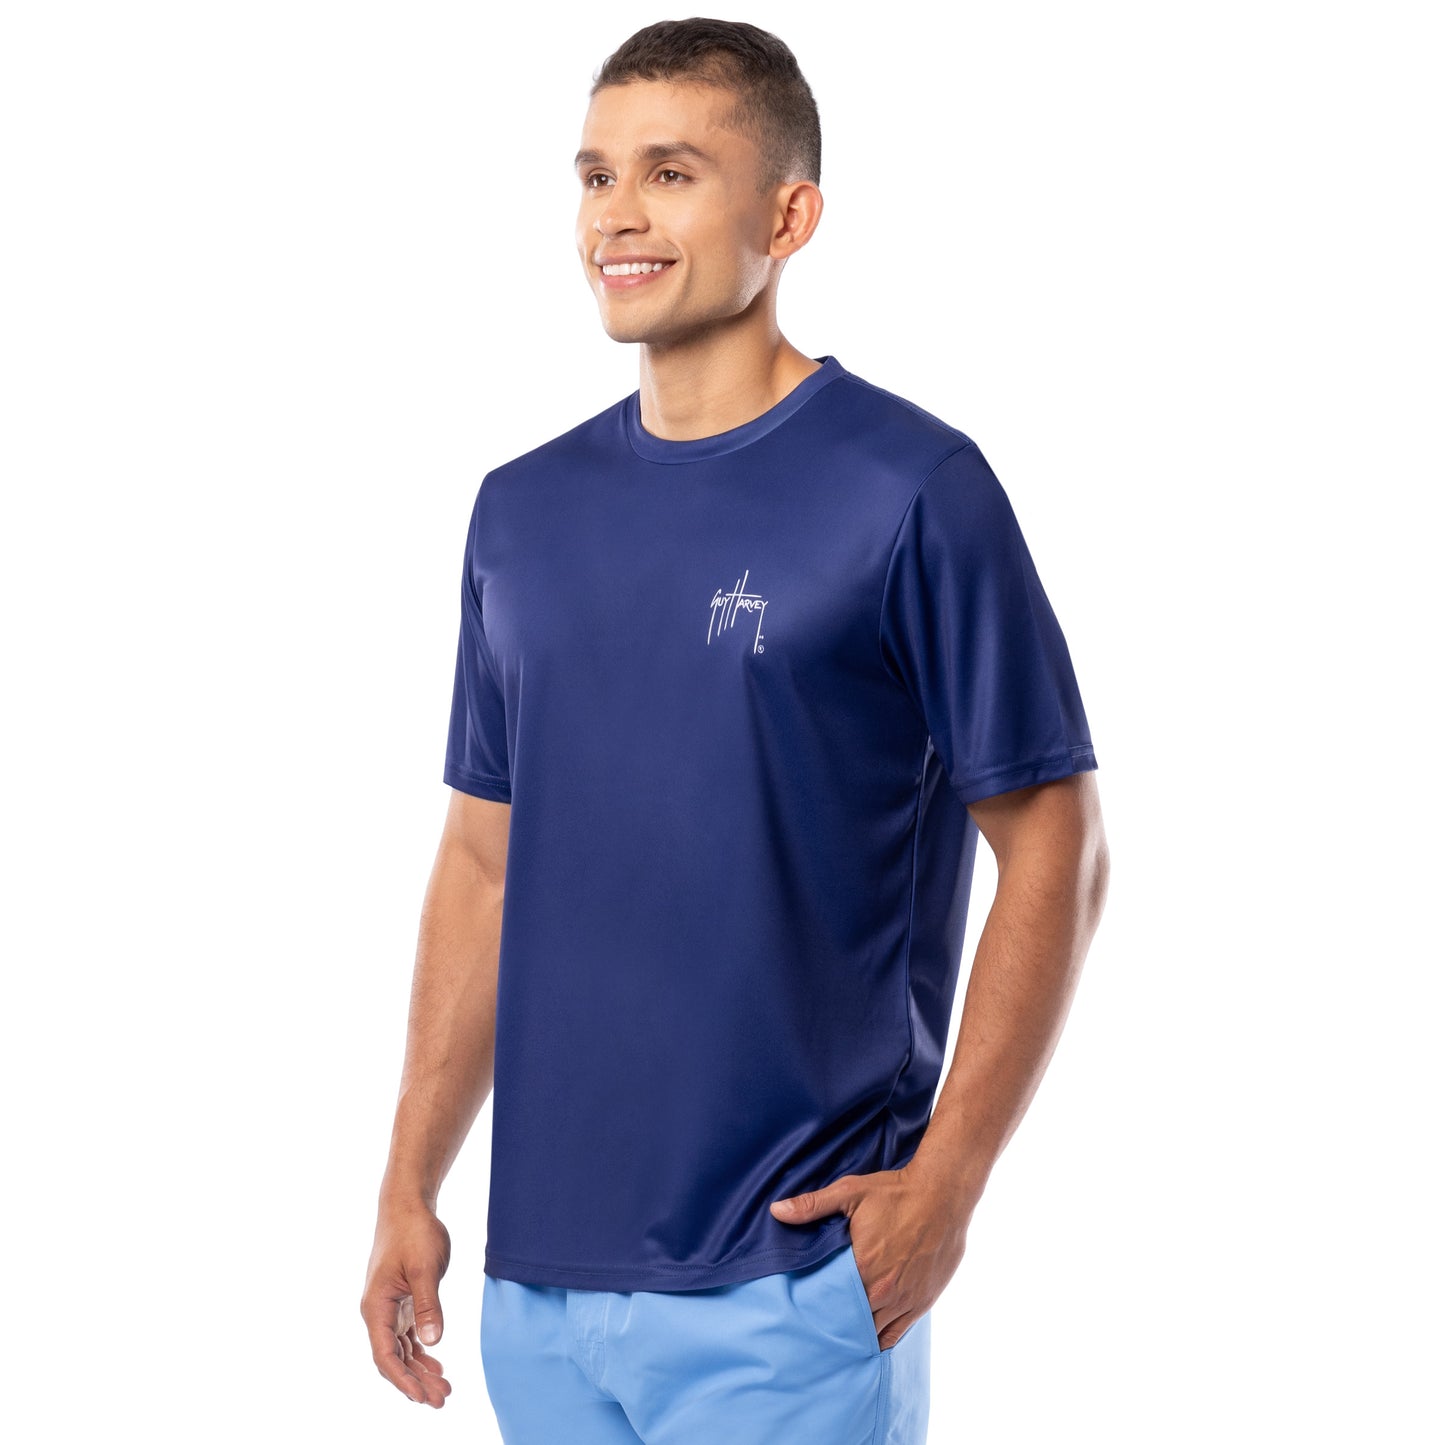 Men's Marlin Island Short Sleeve Performance Shirt